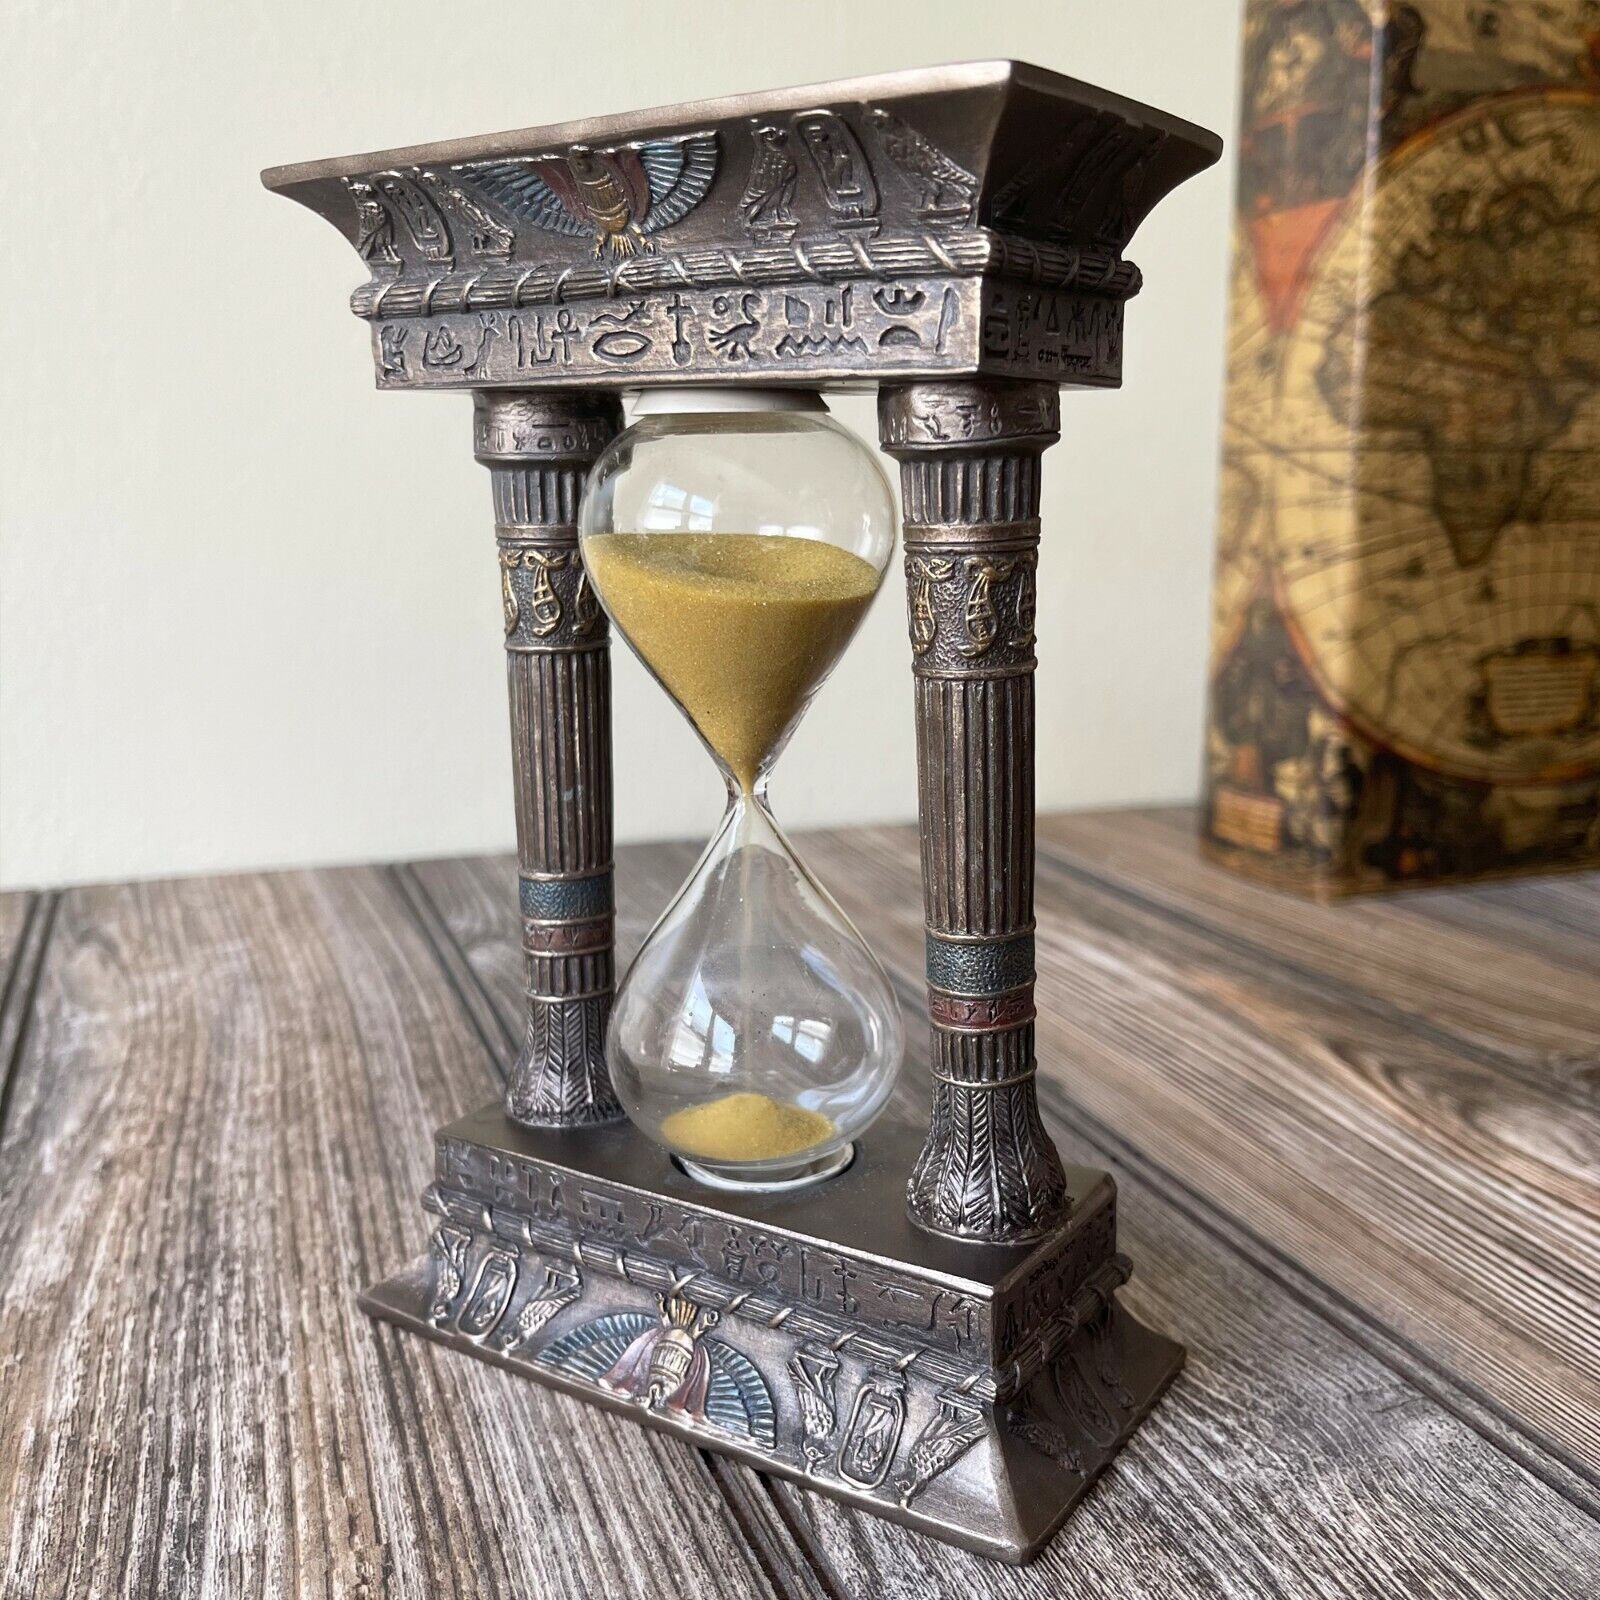 Handmade Egyptian Gateway Gold Sand Hourglass Timer Gift